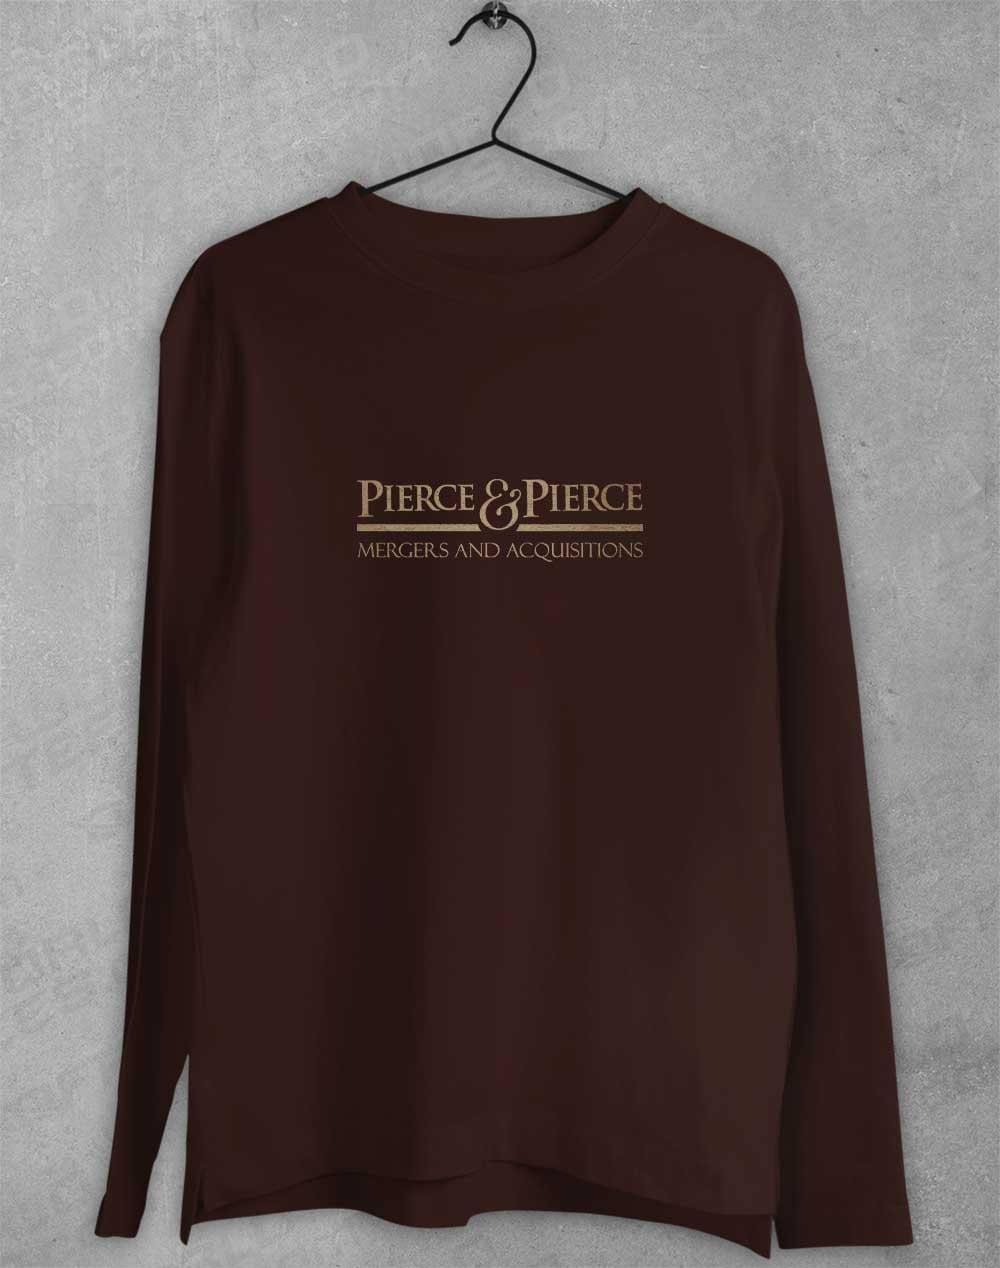 Pierce and Pierce Long Sleeve T-Shirt S / Dark Chocolate  - Off World Tees